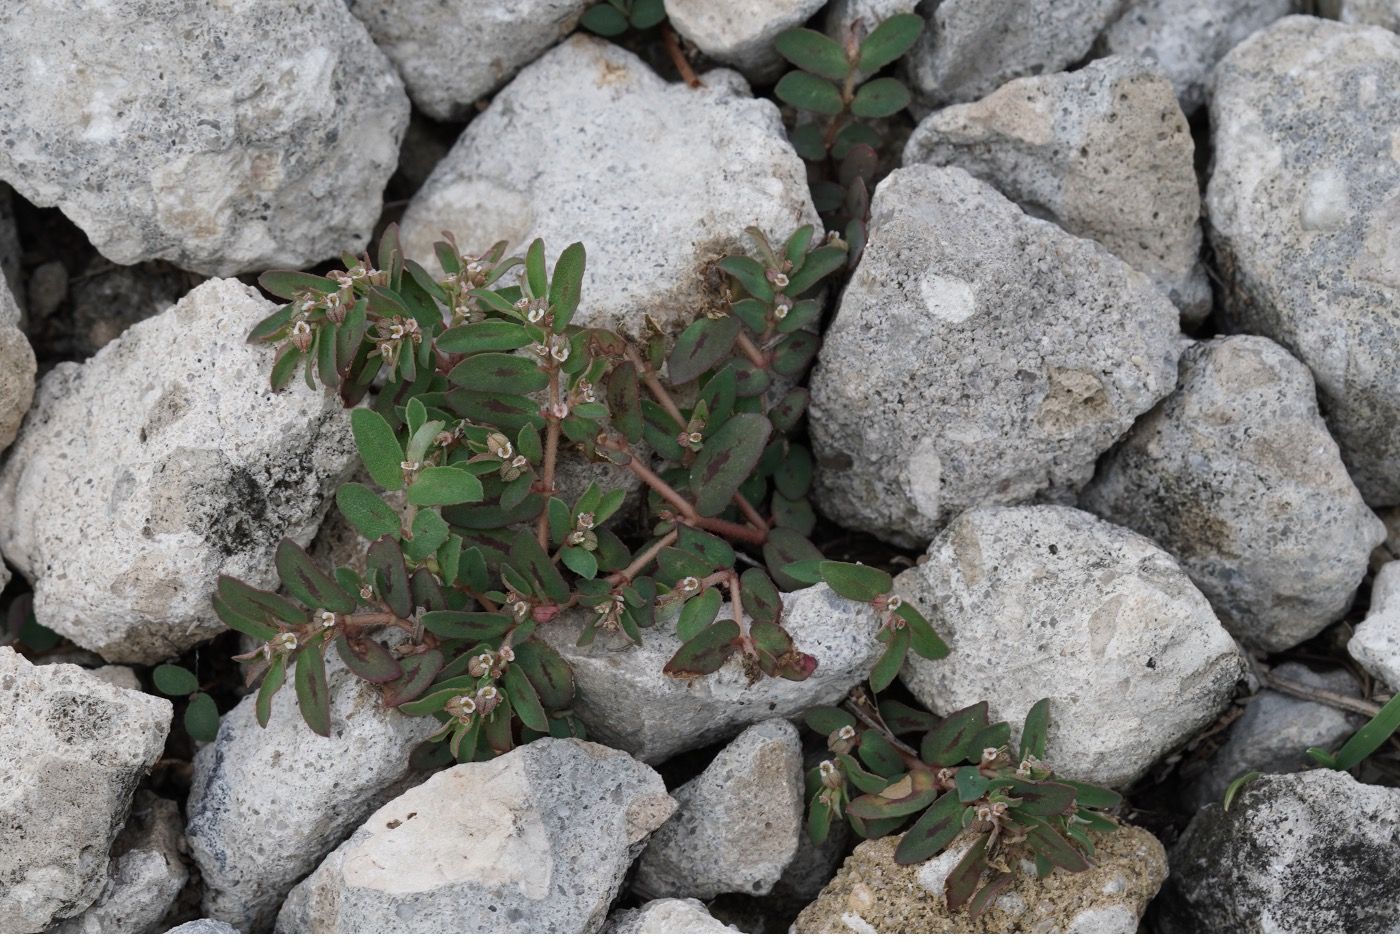 An example of broadleaf weed – spotted spurge inhabiting gravel.